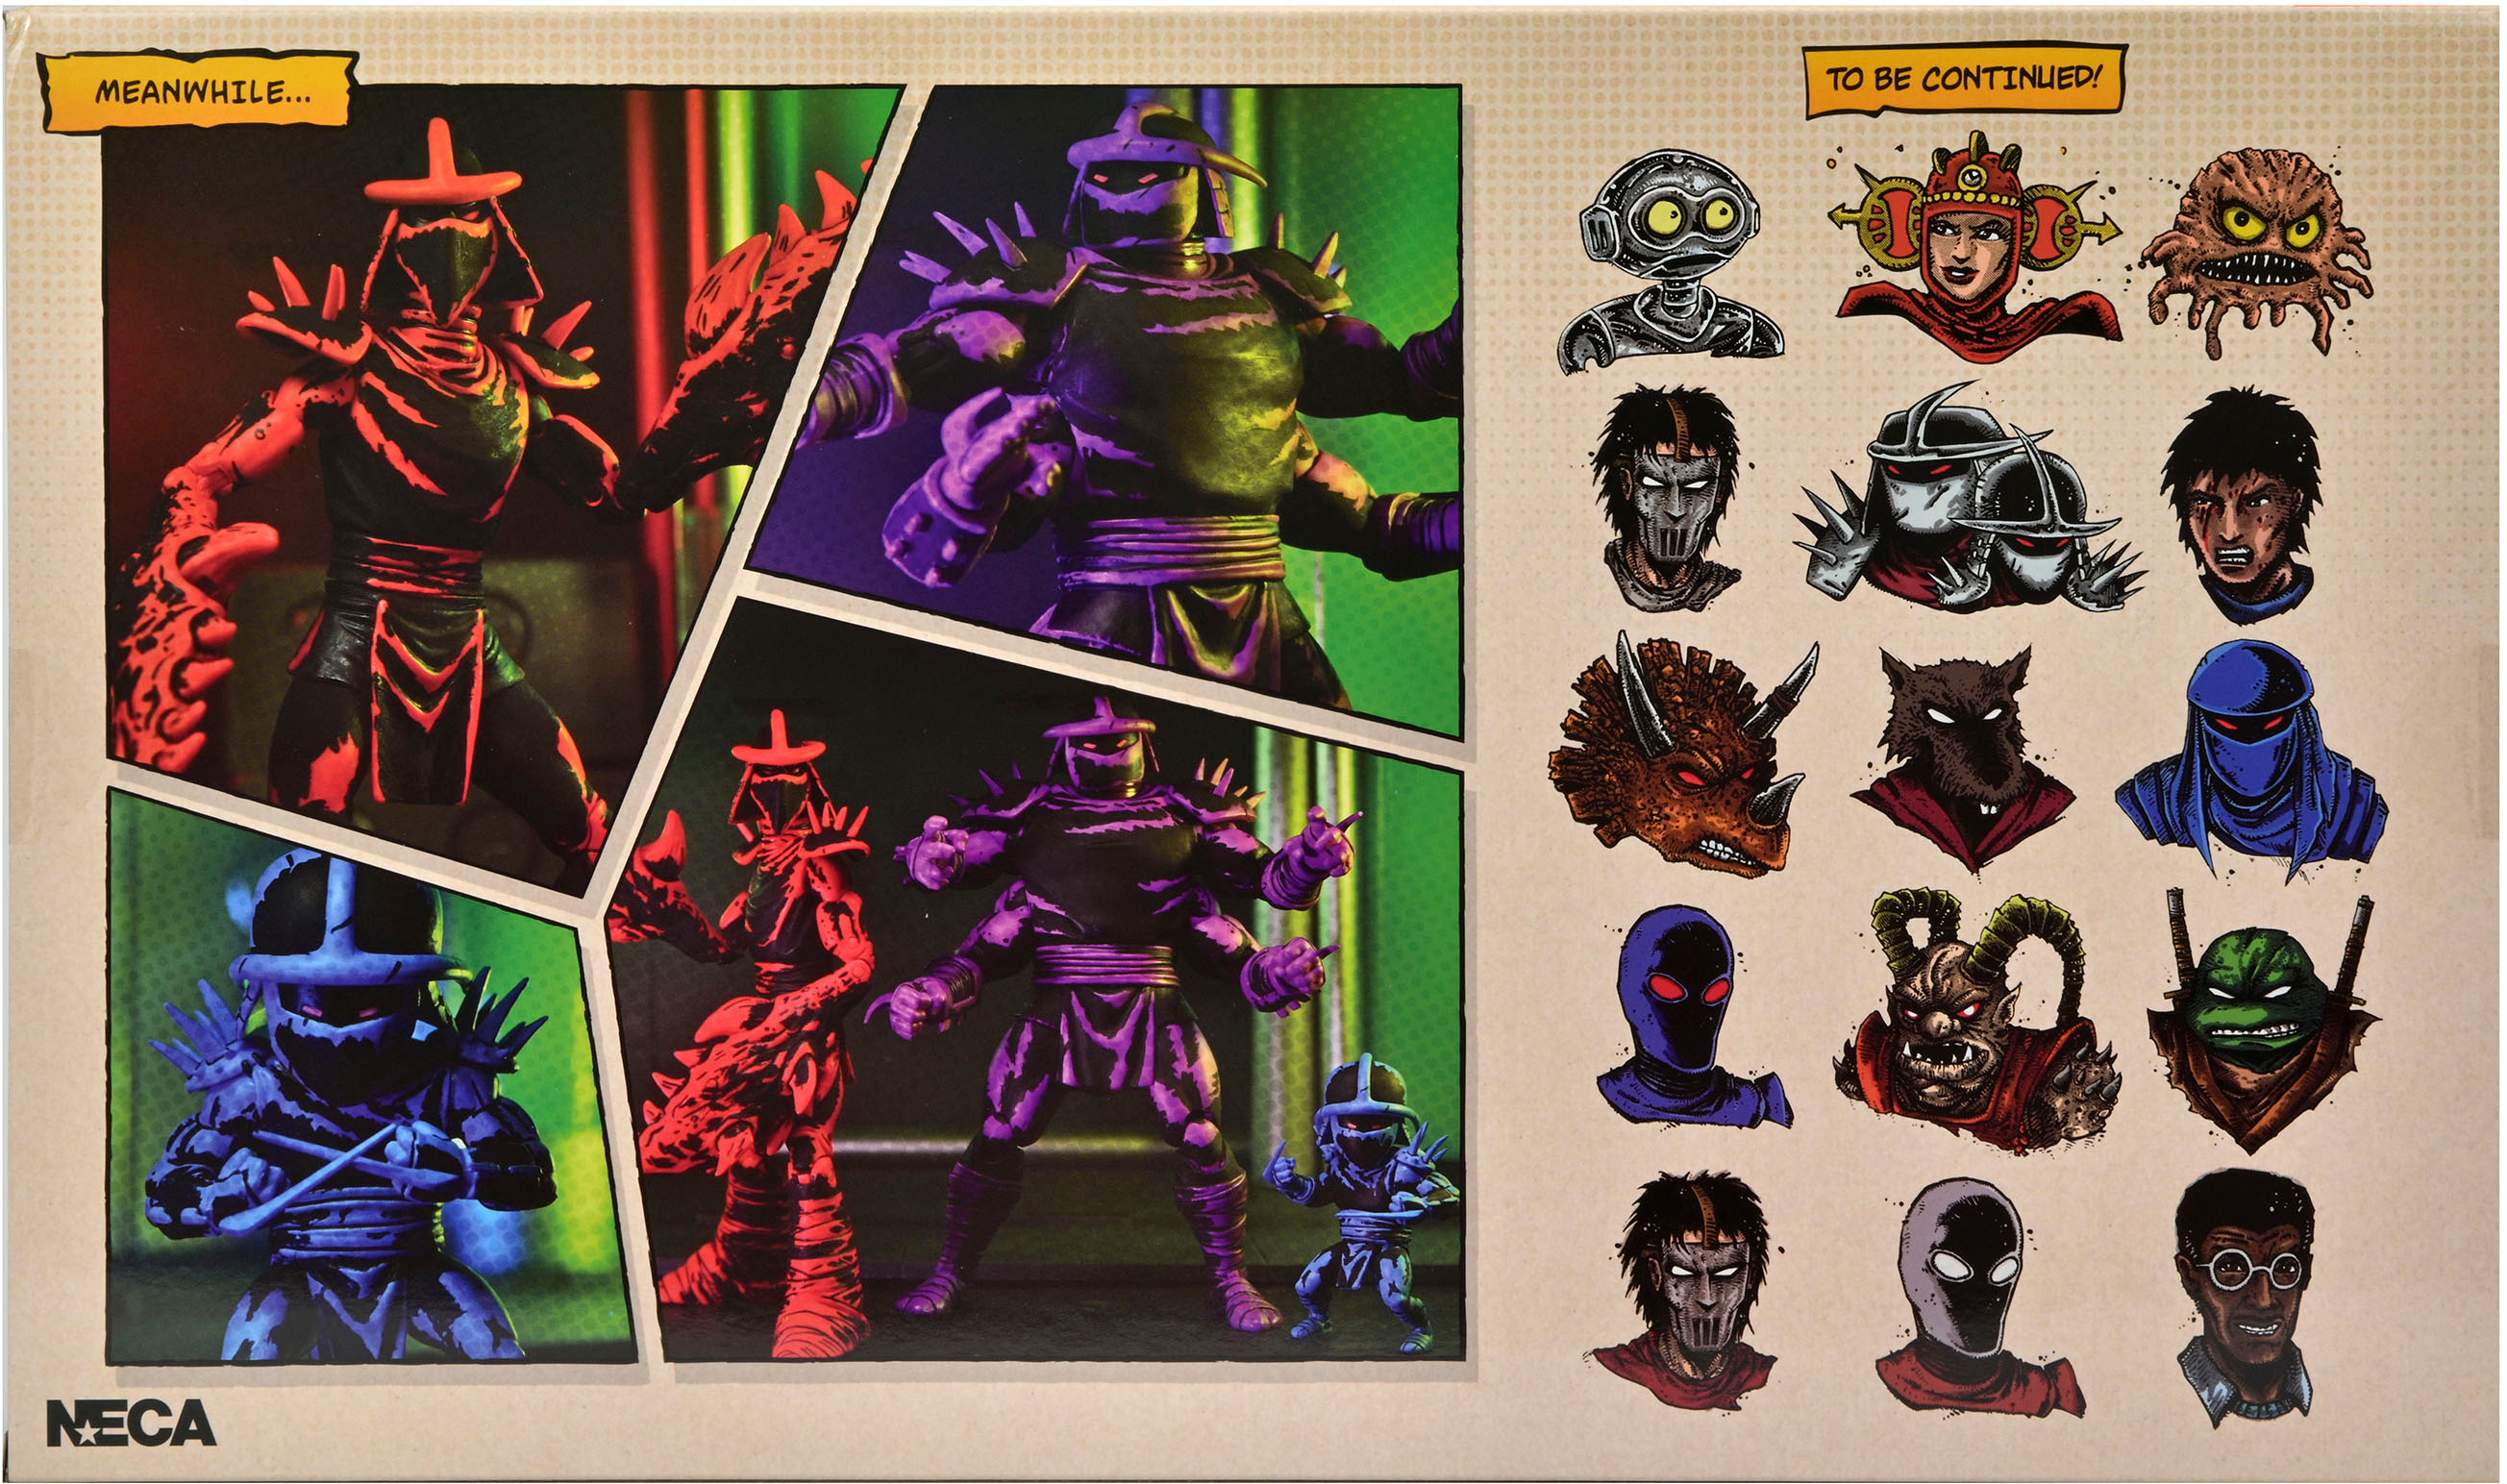 Teenage Mutant Ninja Turtles Mirage Comics Deluxe Shredder Clone